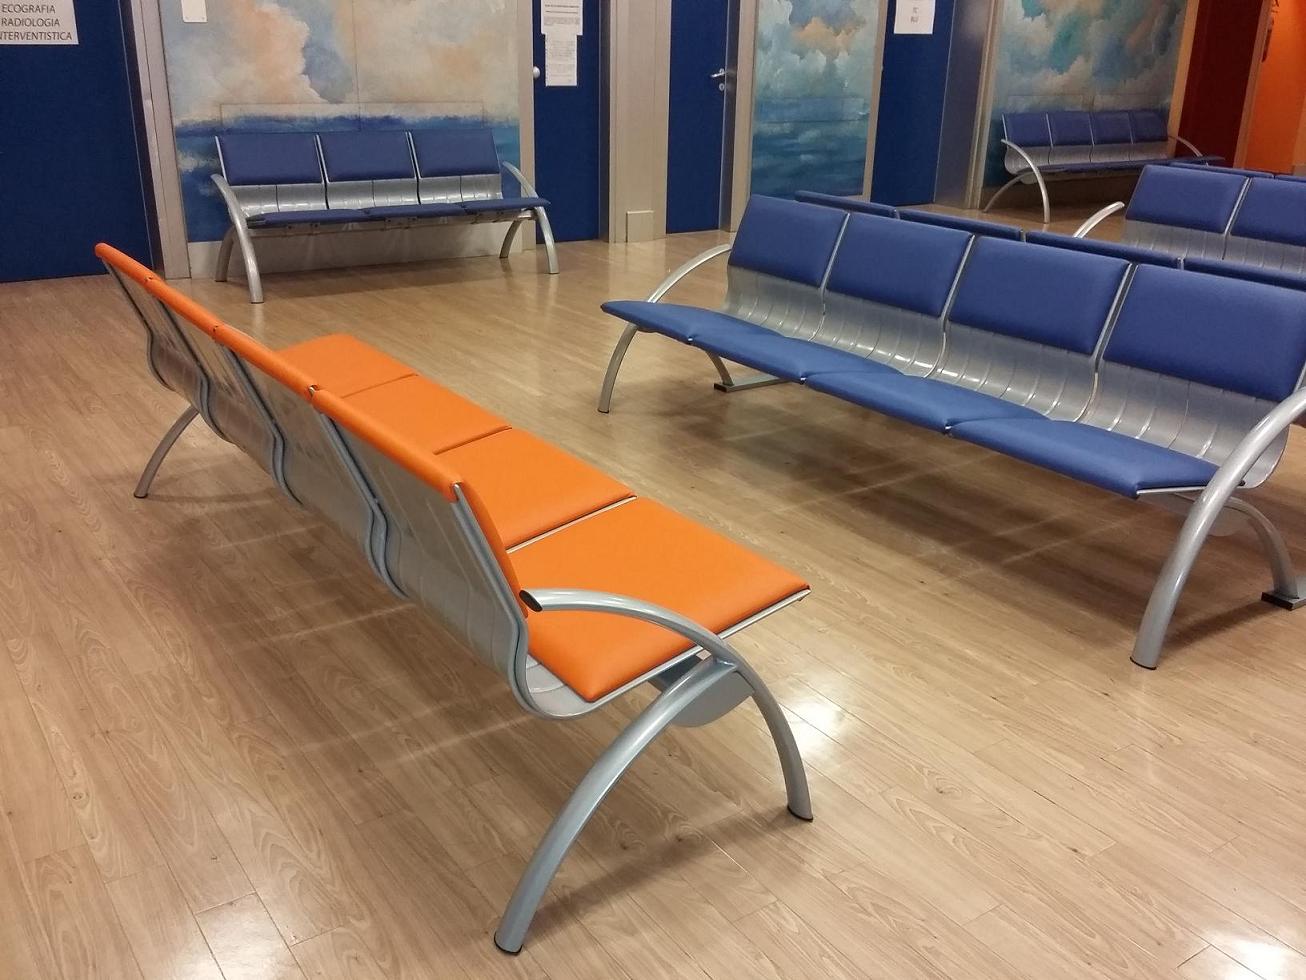 Sala attesa Ospedale IOV - Padova